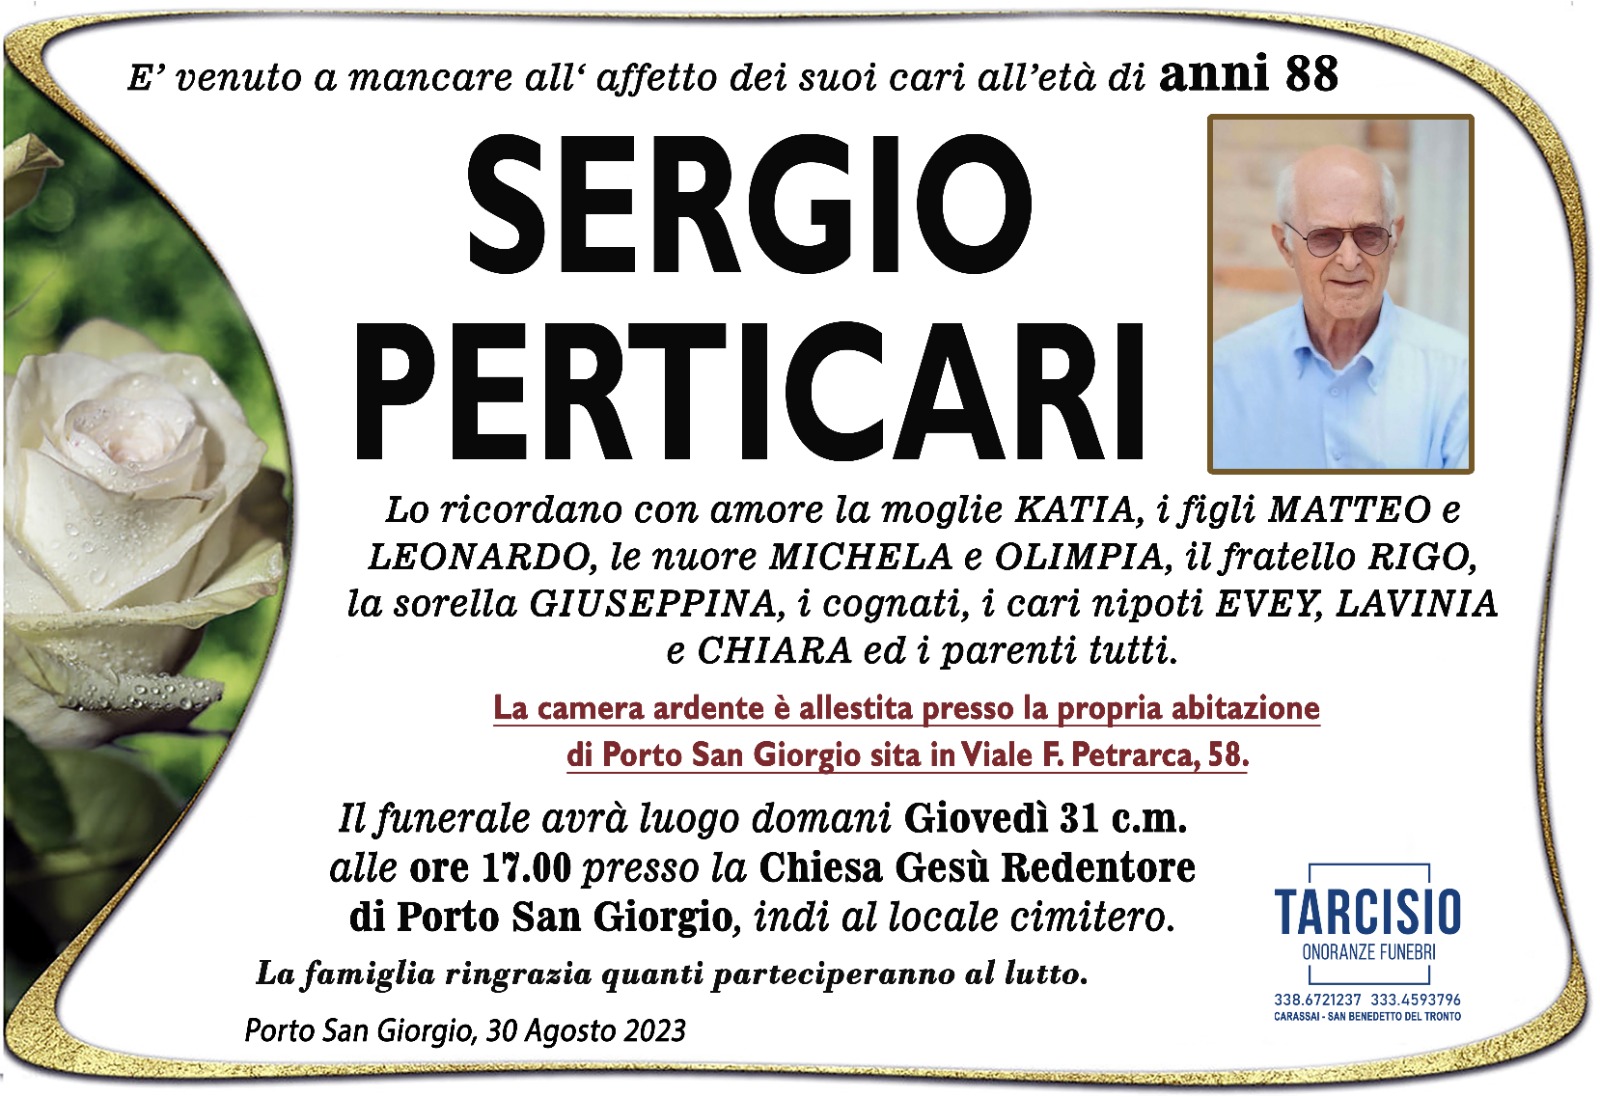 Sergio Perticari